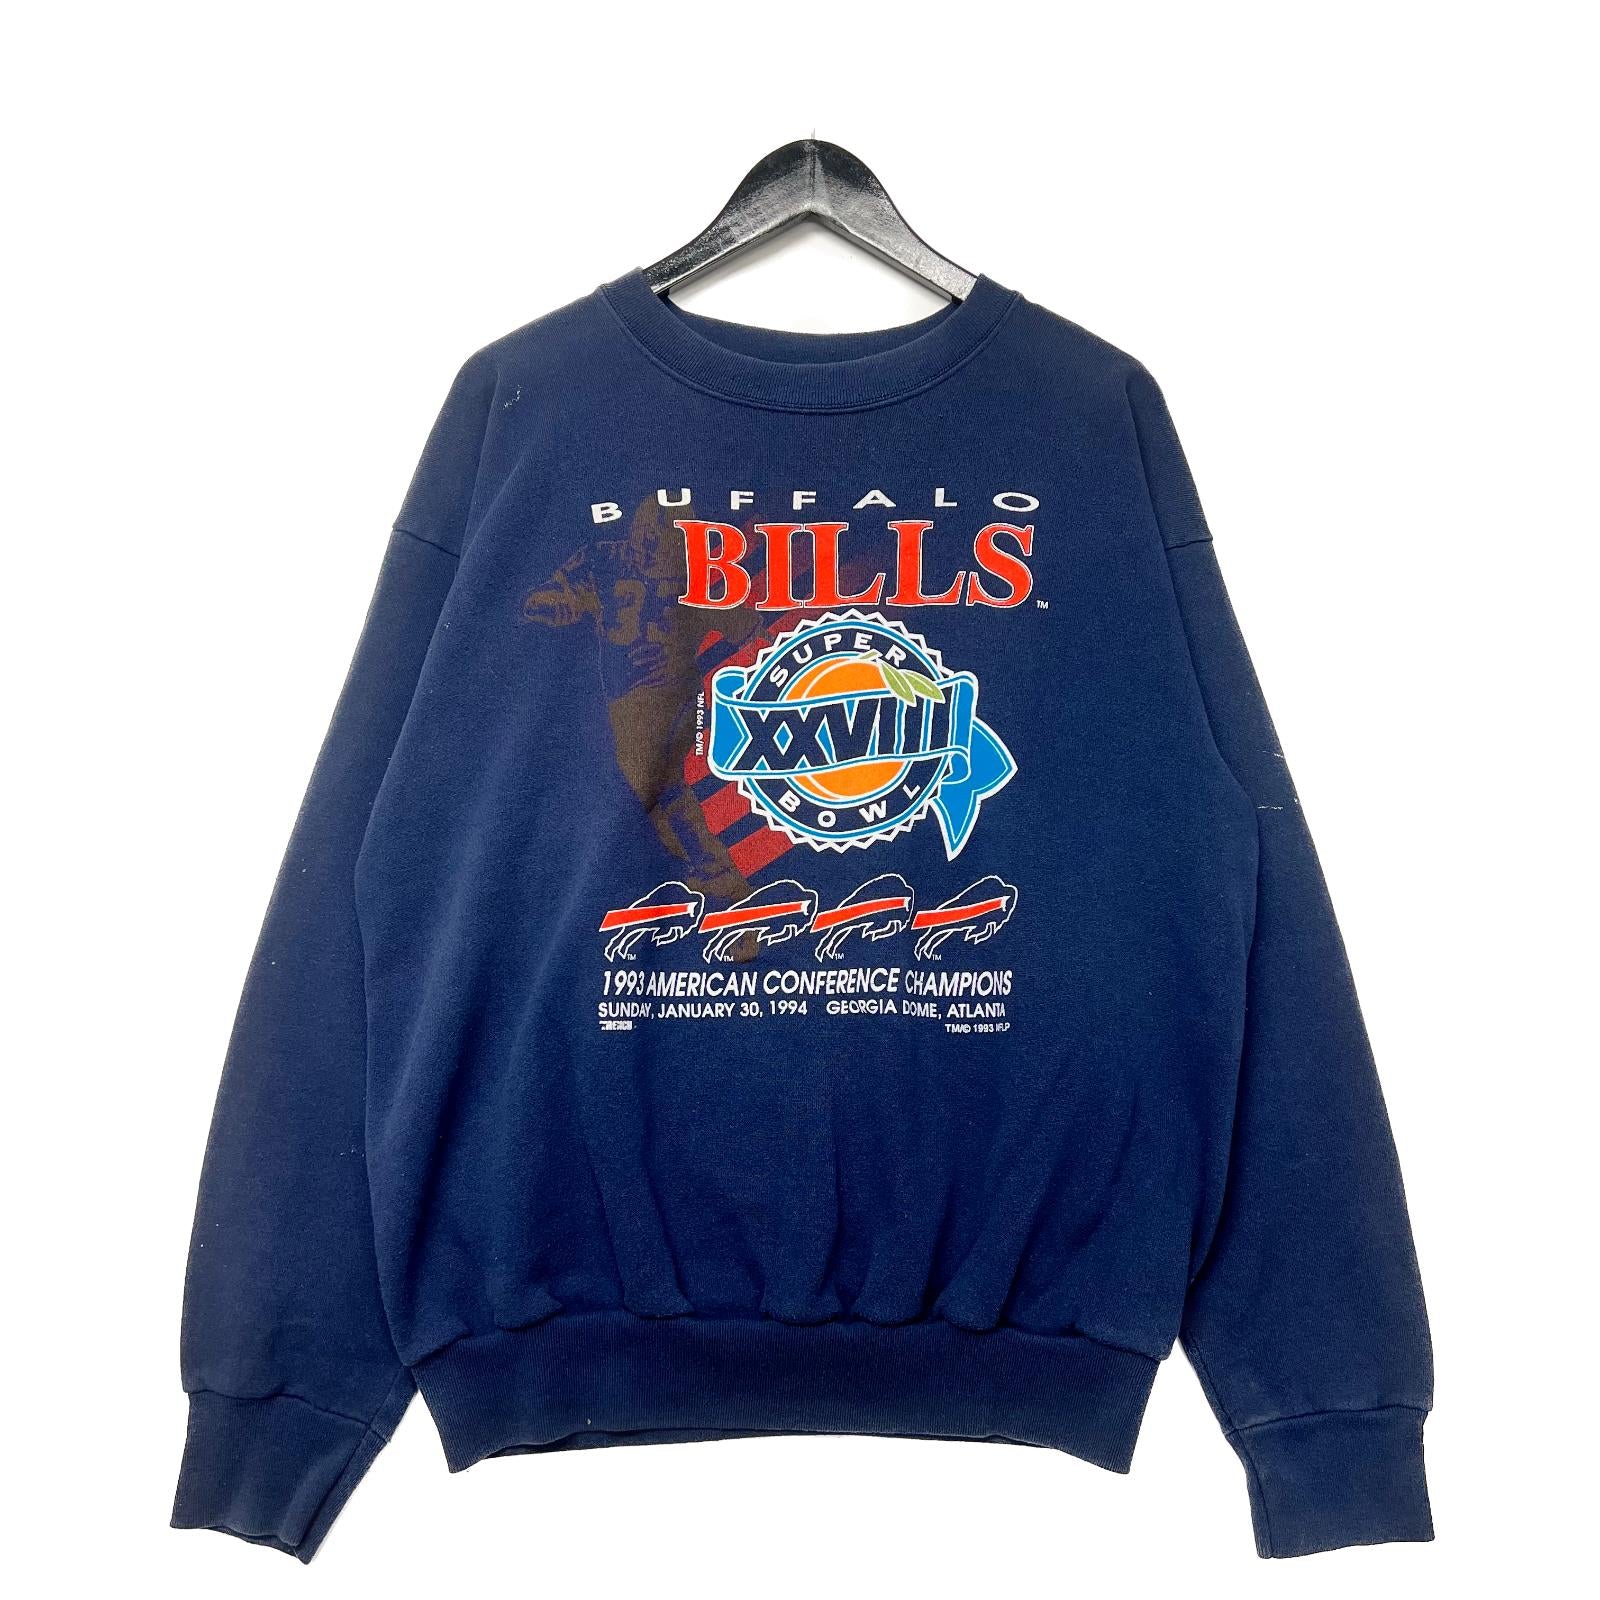 Vintage 1993 NFL Buffalo Bills Navy Sweatshirt Size L